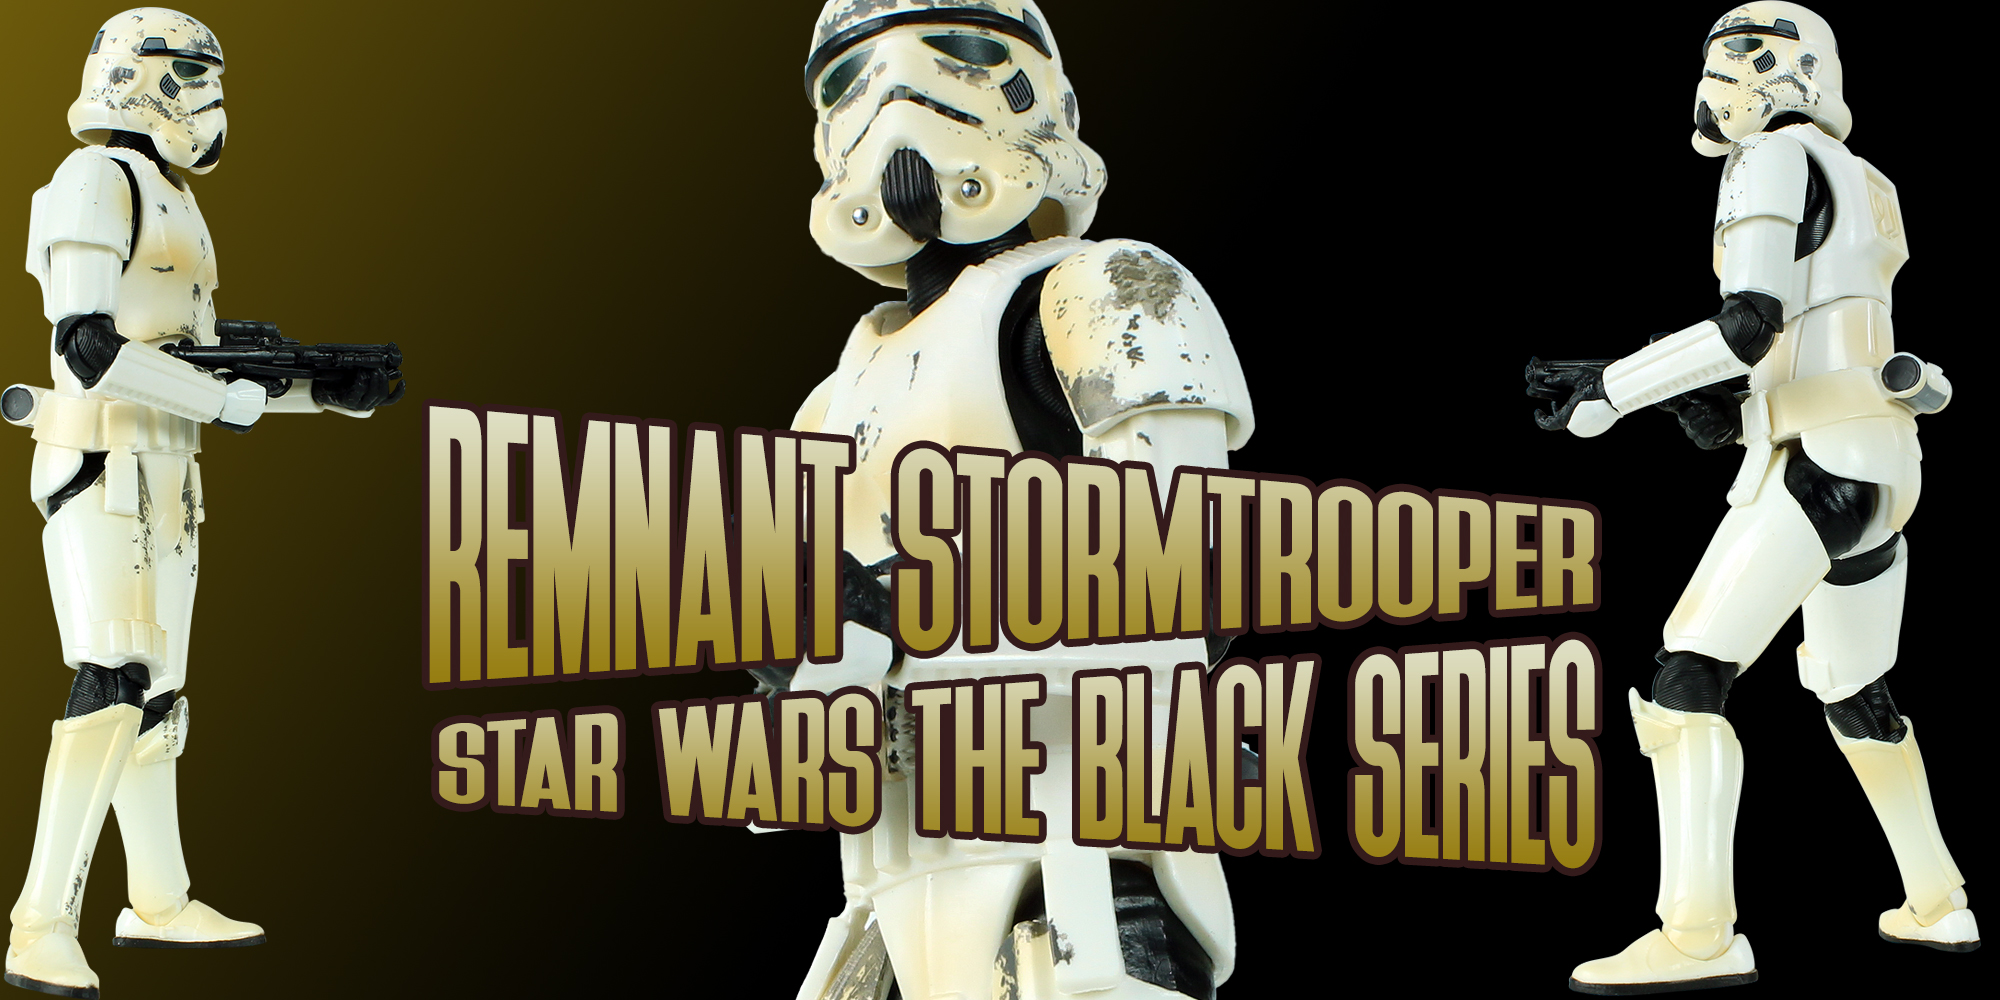 Black Series 6" Remnant Stormtrooper Added